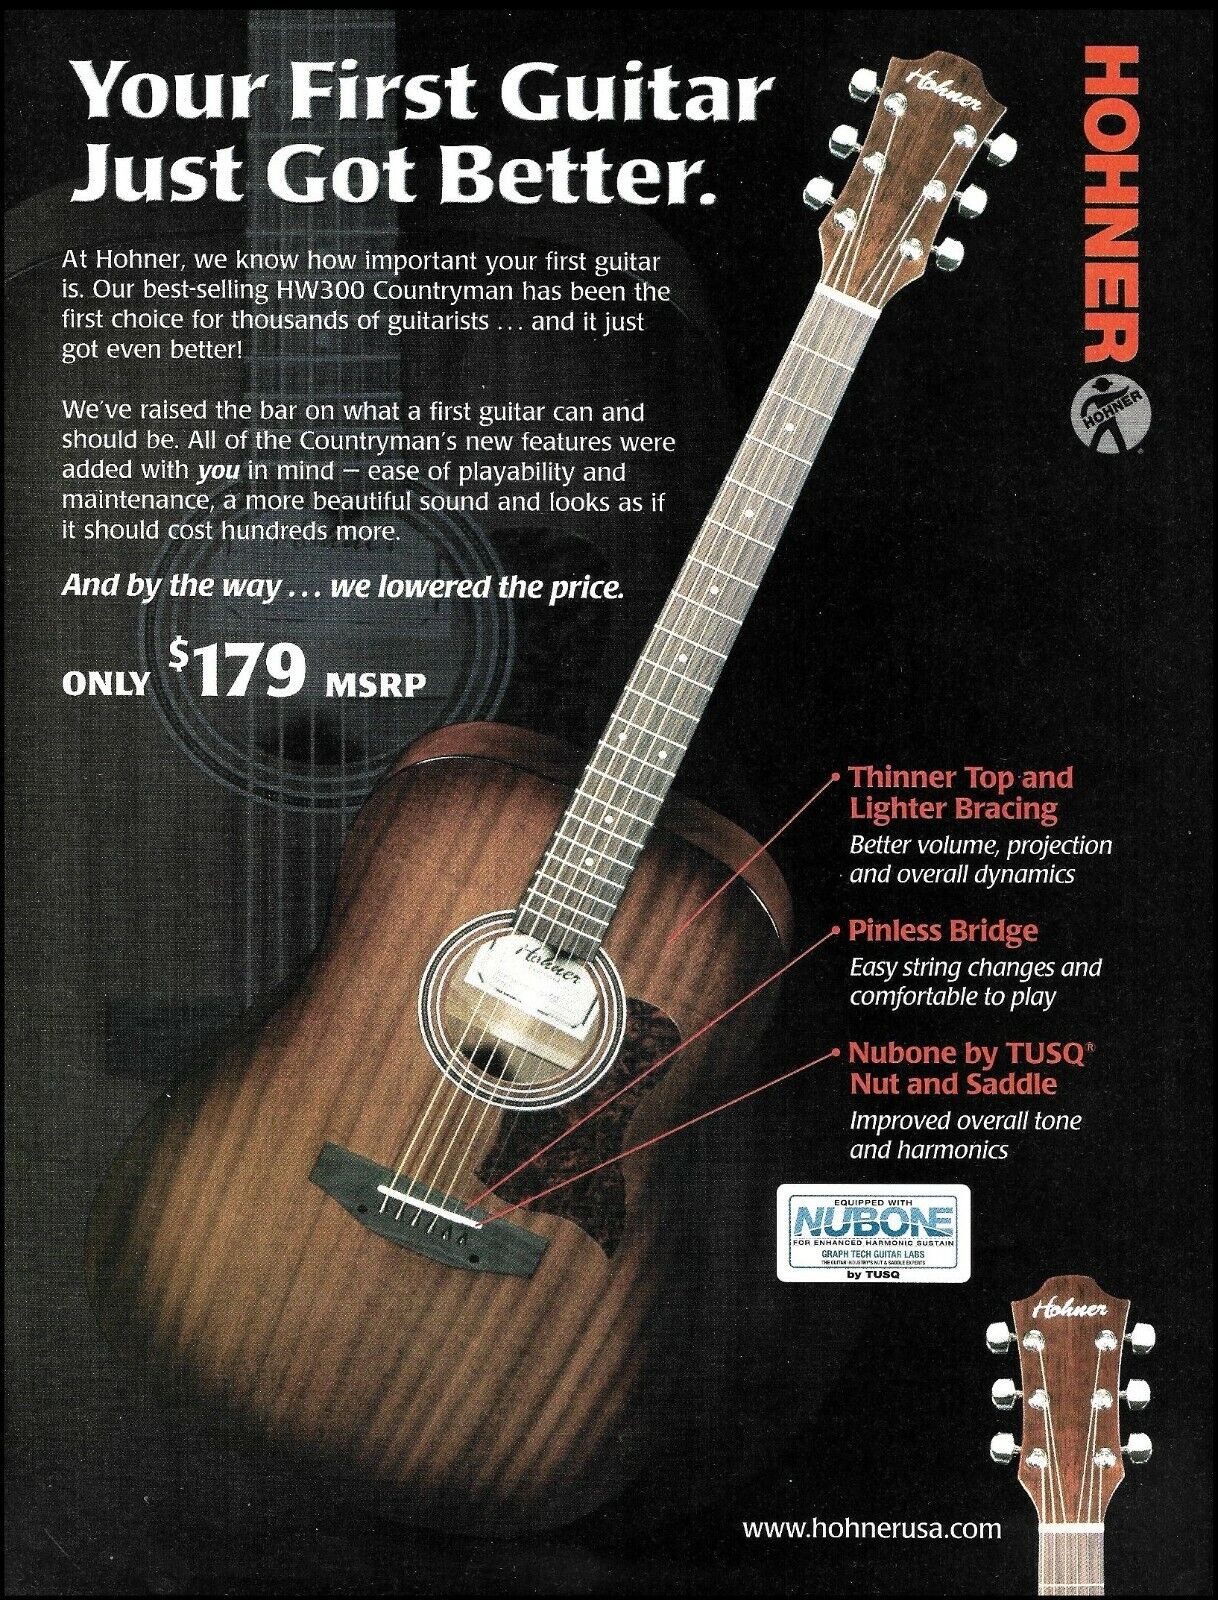 Hohner HW300 Countryman 2005 acoustic guitar advertisement 8 x 11 ad print